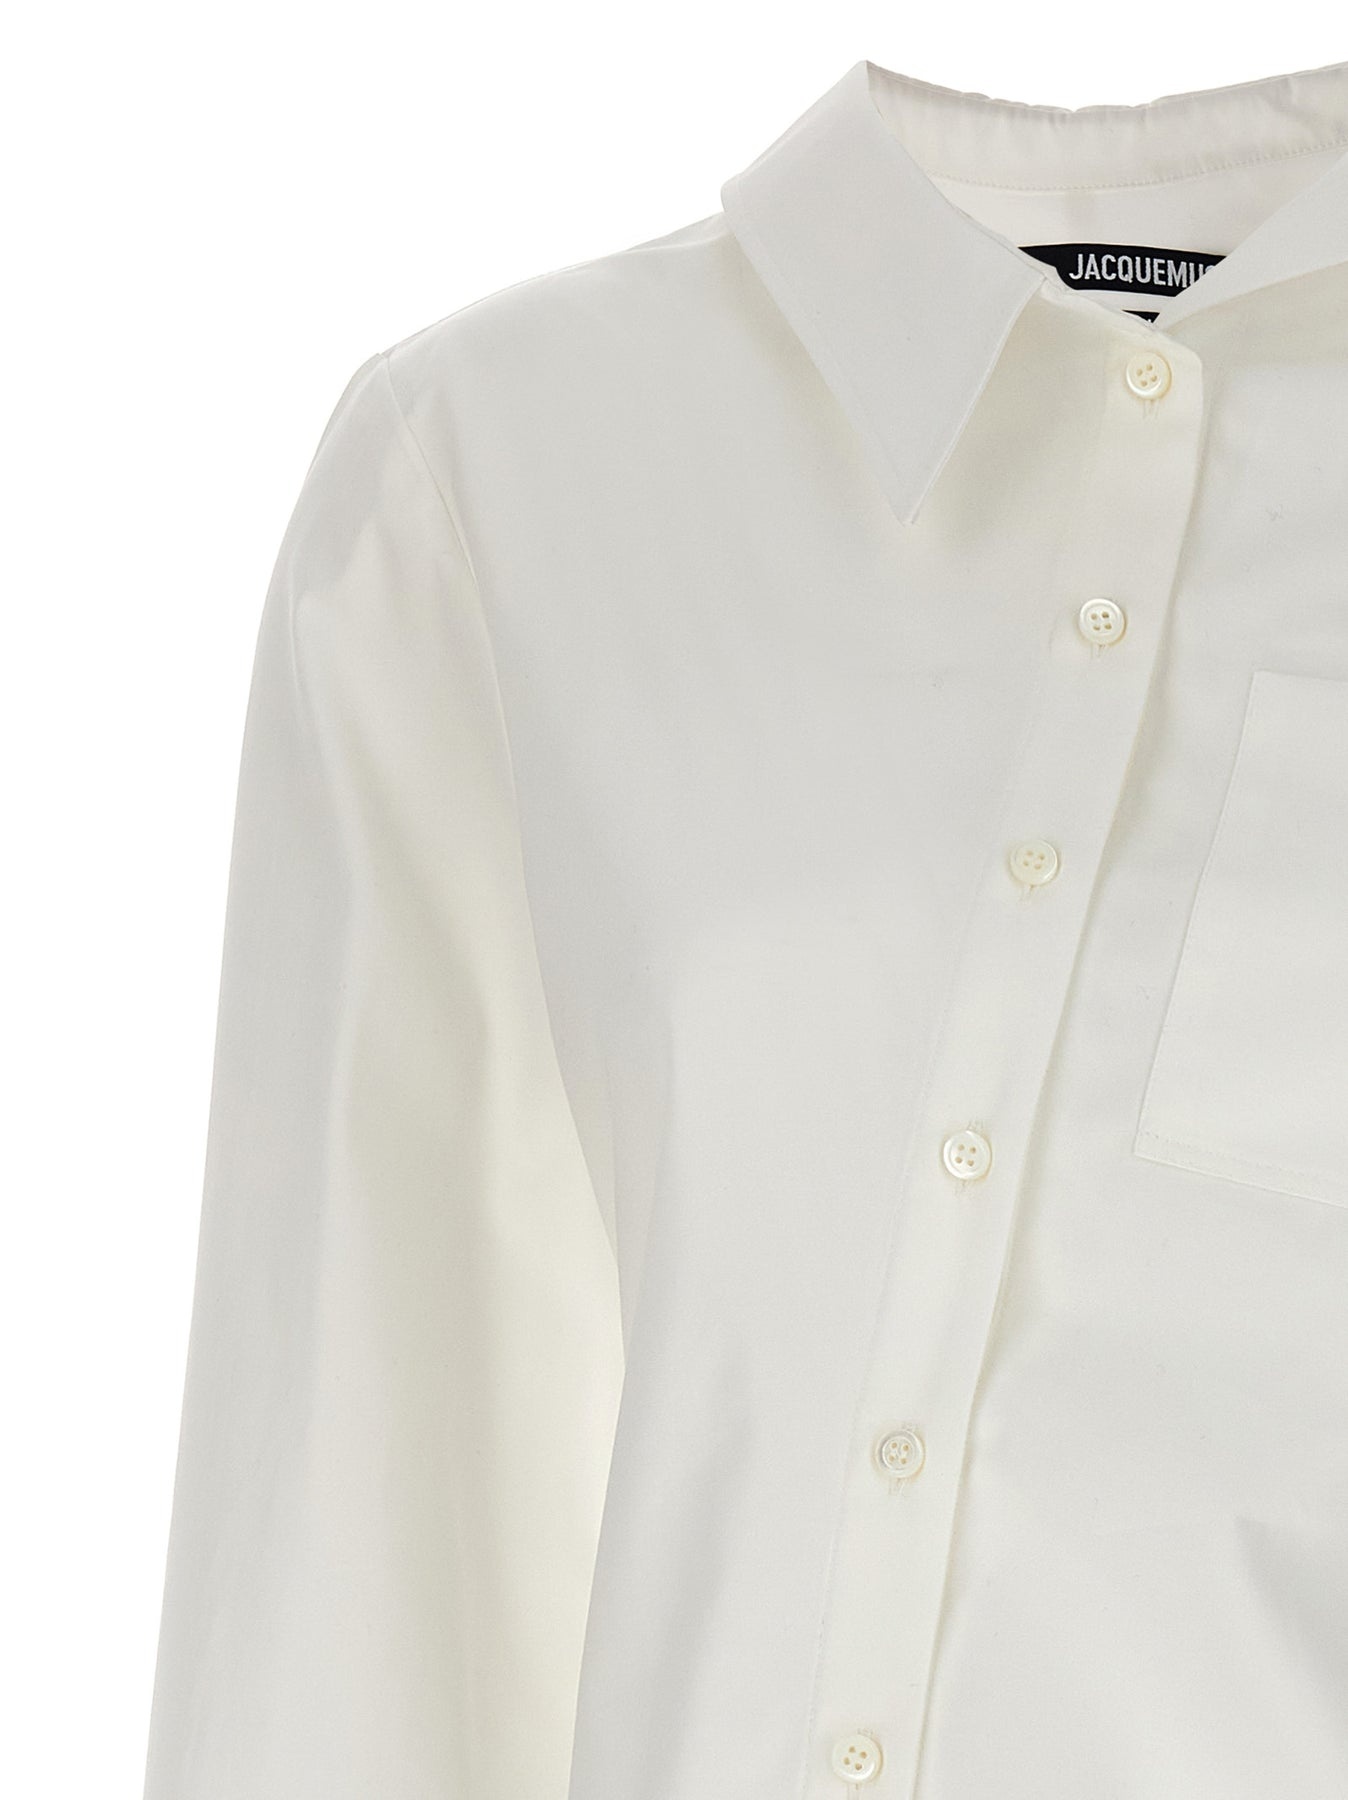 La Chemise Pablo Shirt, Blouse White - 3